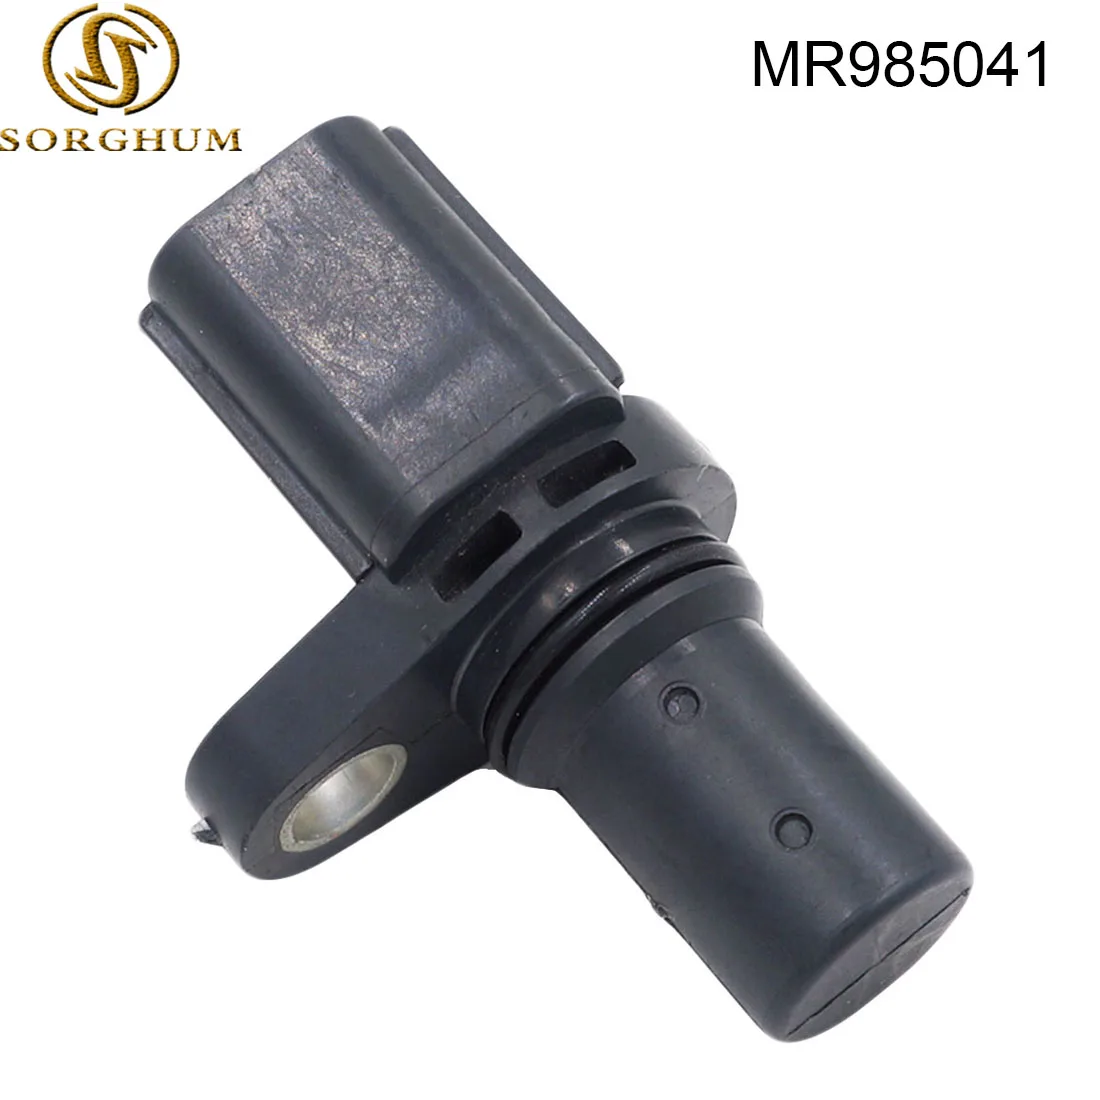 

MR985041 G4T09171 Camshaft Position Sensor For Mitsubishi L200 WARRIOR 2.5 Pajero Colt Lancer ASX CZ A 4A91 4A92 MAXGEAR 2006+